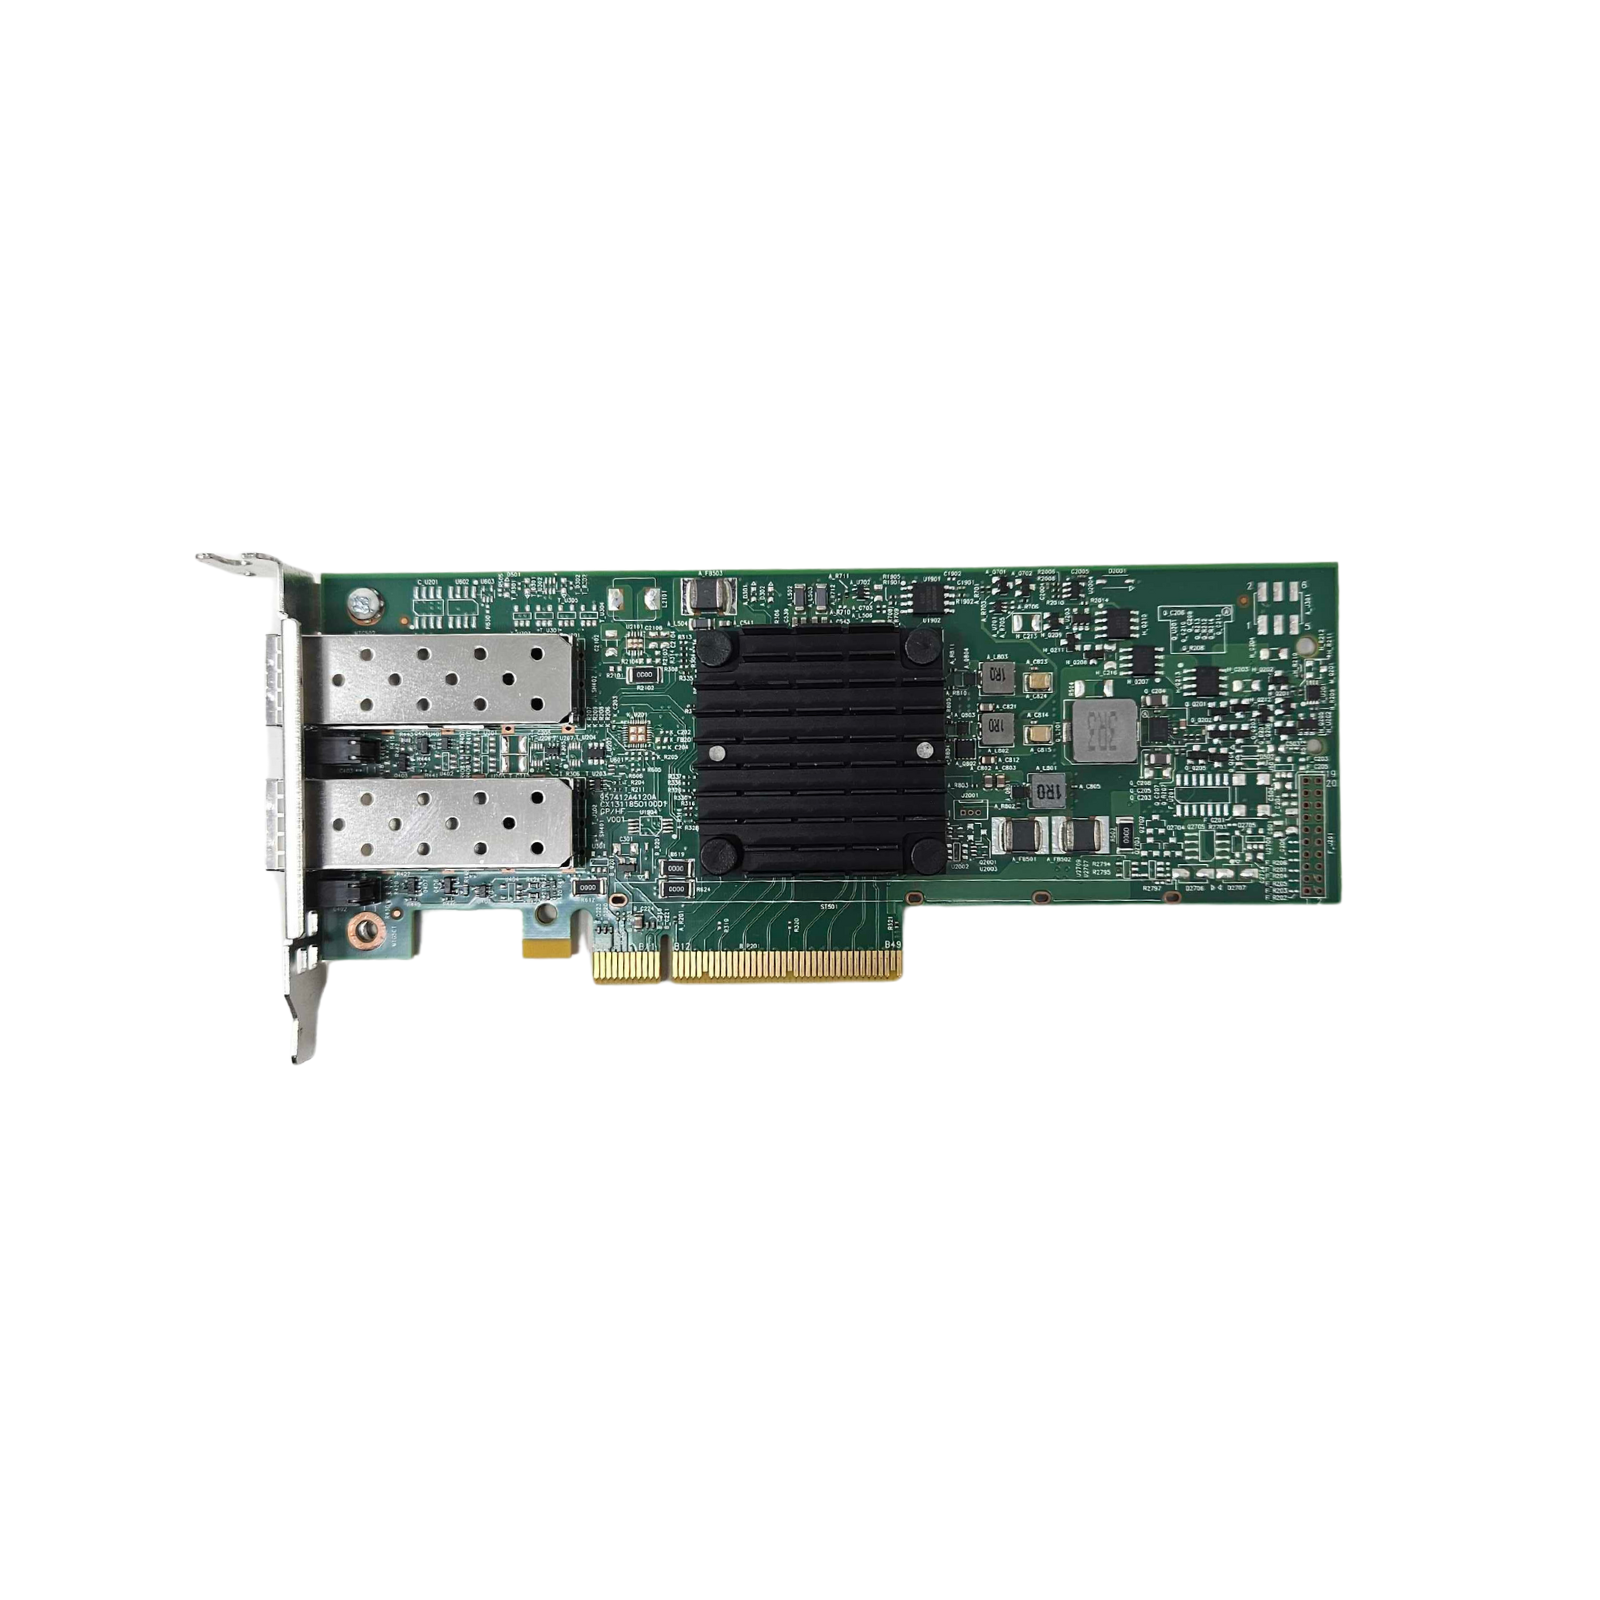 Dual-Port 10 Gb/s Ethernet PCI Express Gen3 x8 Network Interface Card (BCM957412A4120AC)